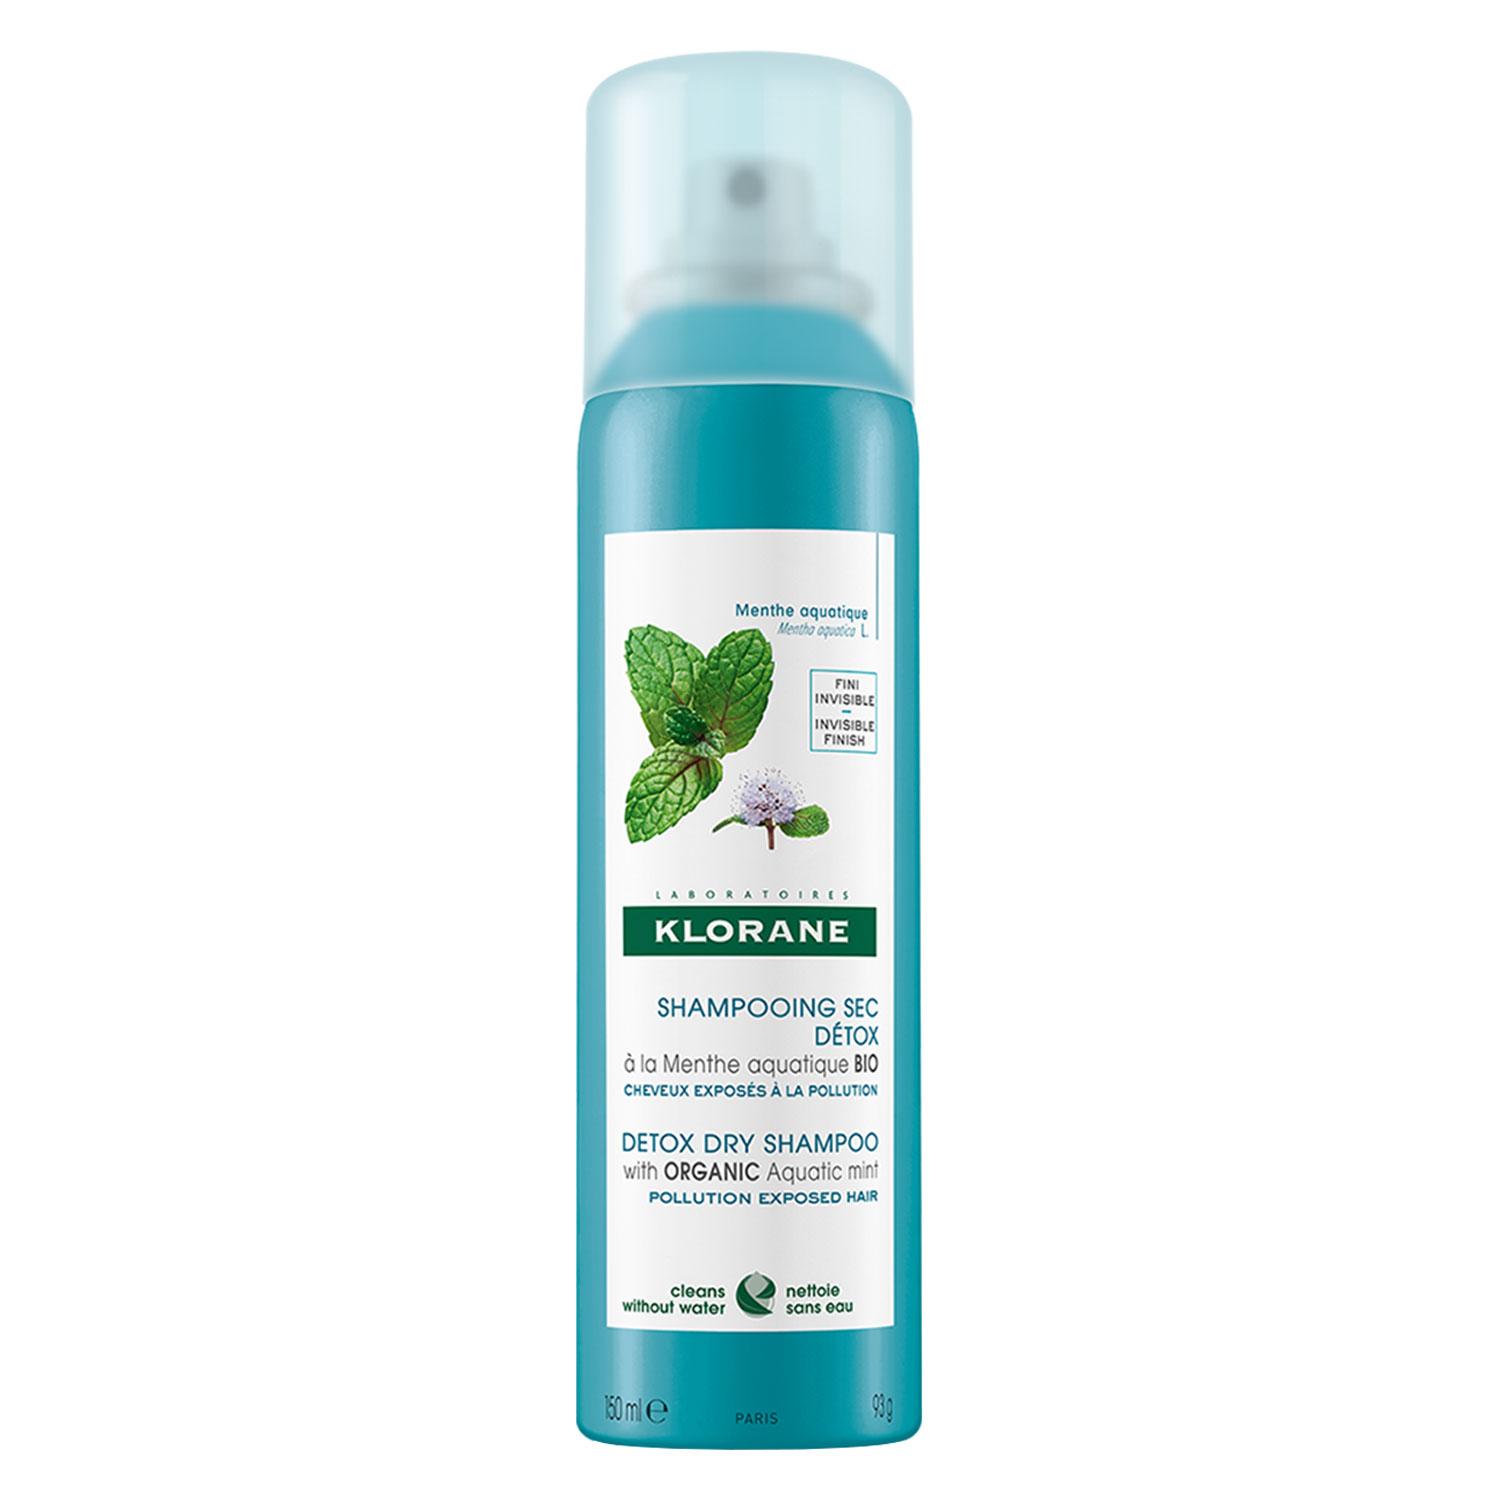 KLORANE Hair - Organic Aquatic Mint Dry Shampoo